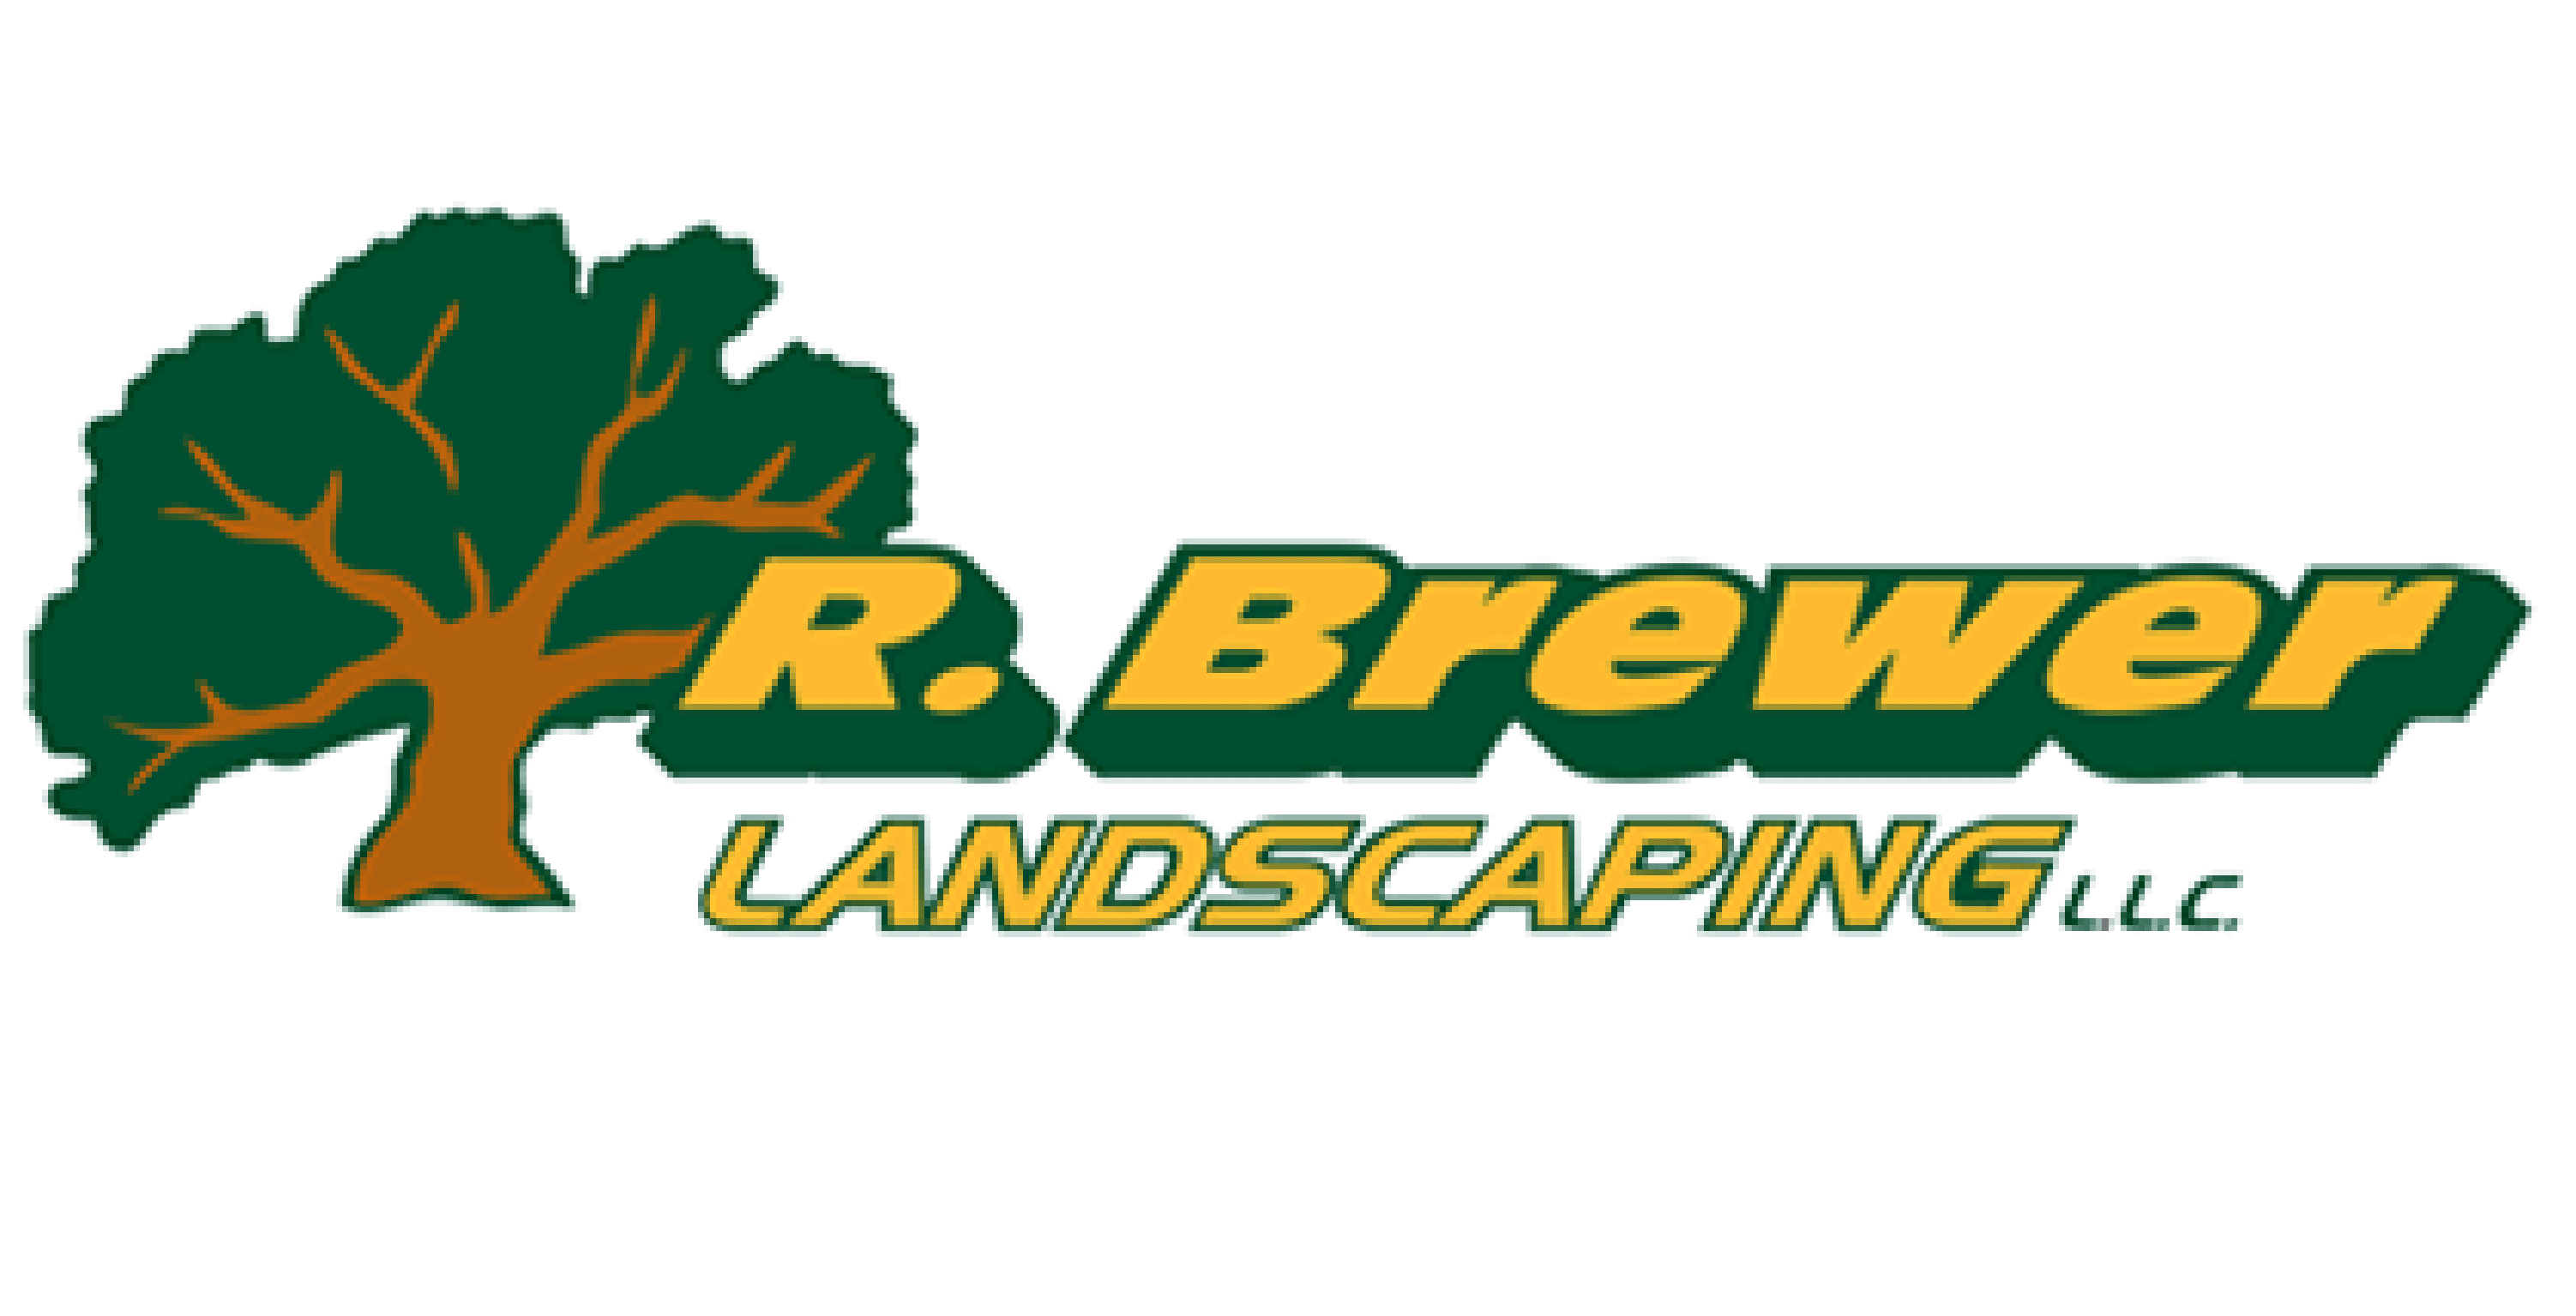 R. Brewer Landscaping, LLC